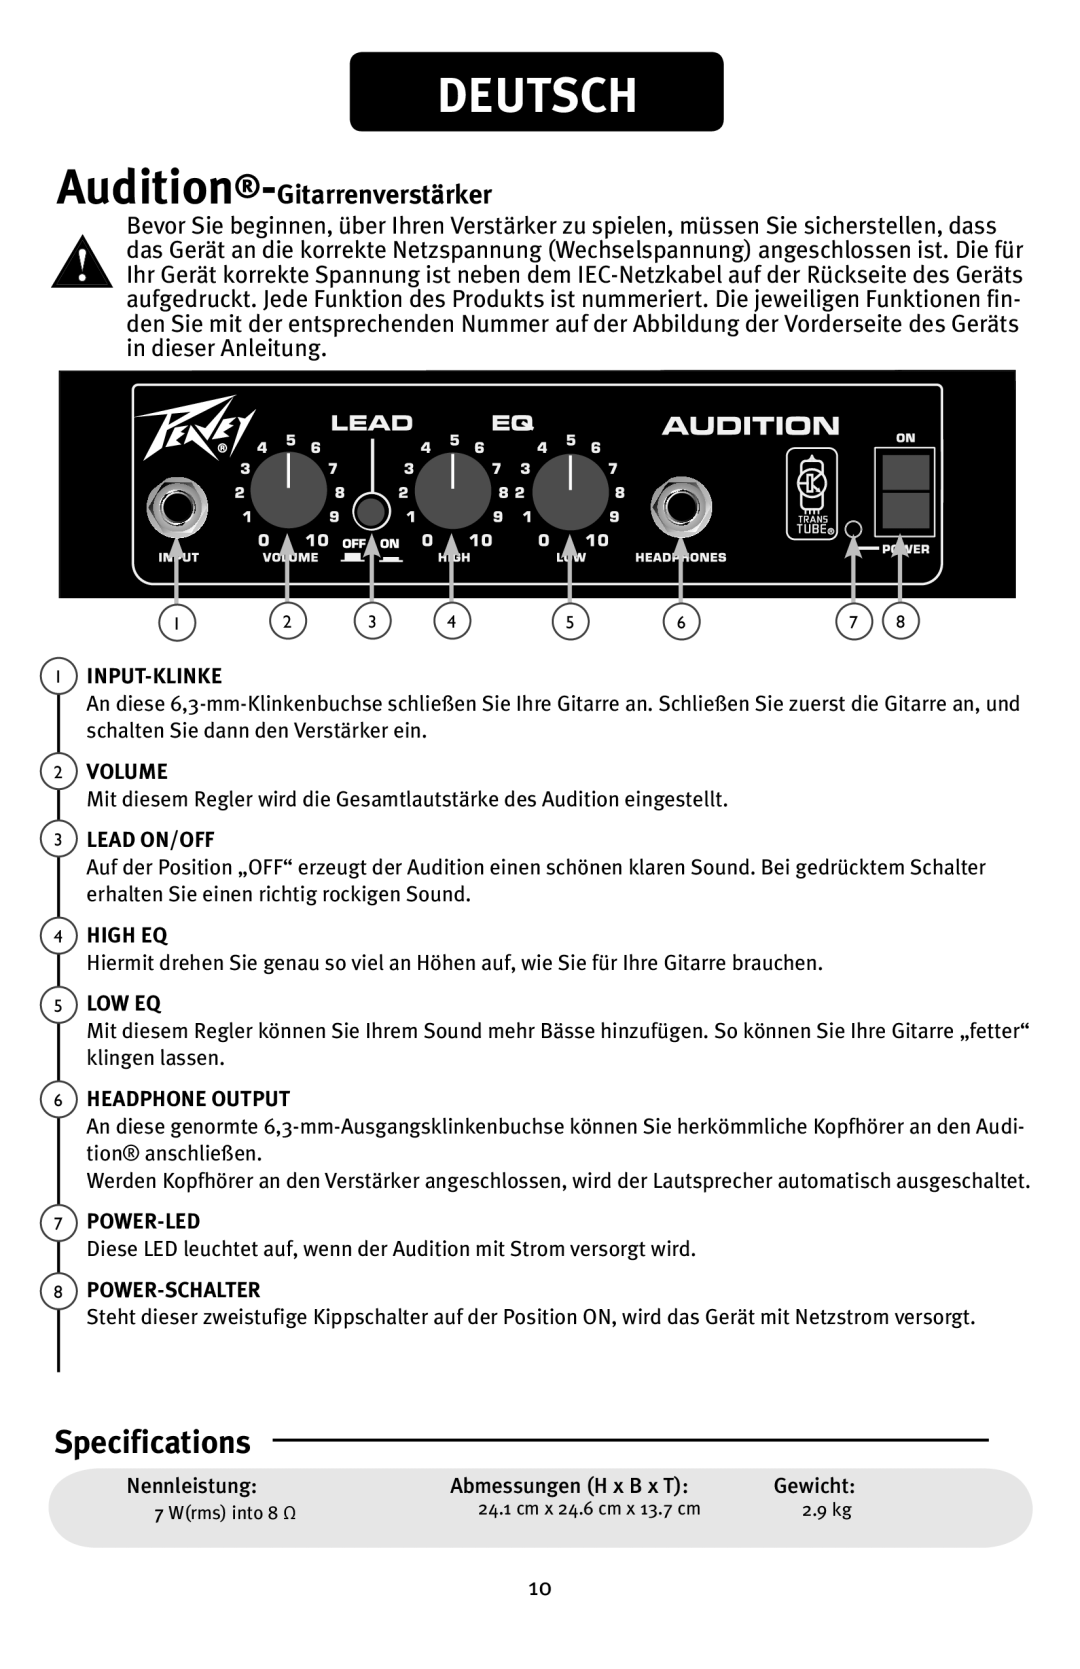 Peavey manual Deutsch, Audition-Gitarrenverstärker, 1INPUT-KLINKE, 7POWER-LED, 8POWER-SCHALTER, Specifications, 2VOLUME 